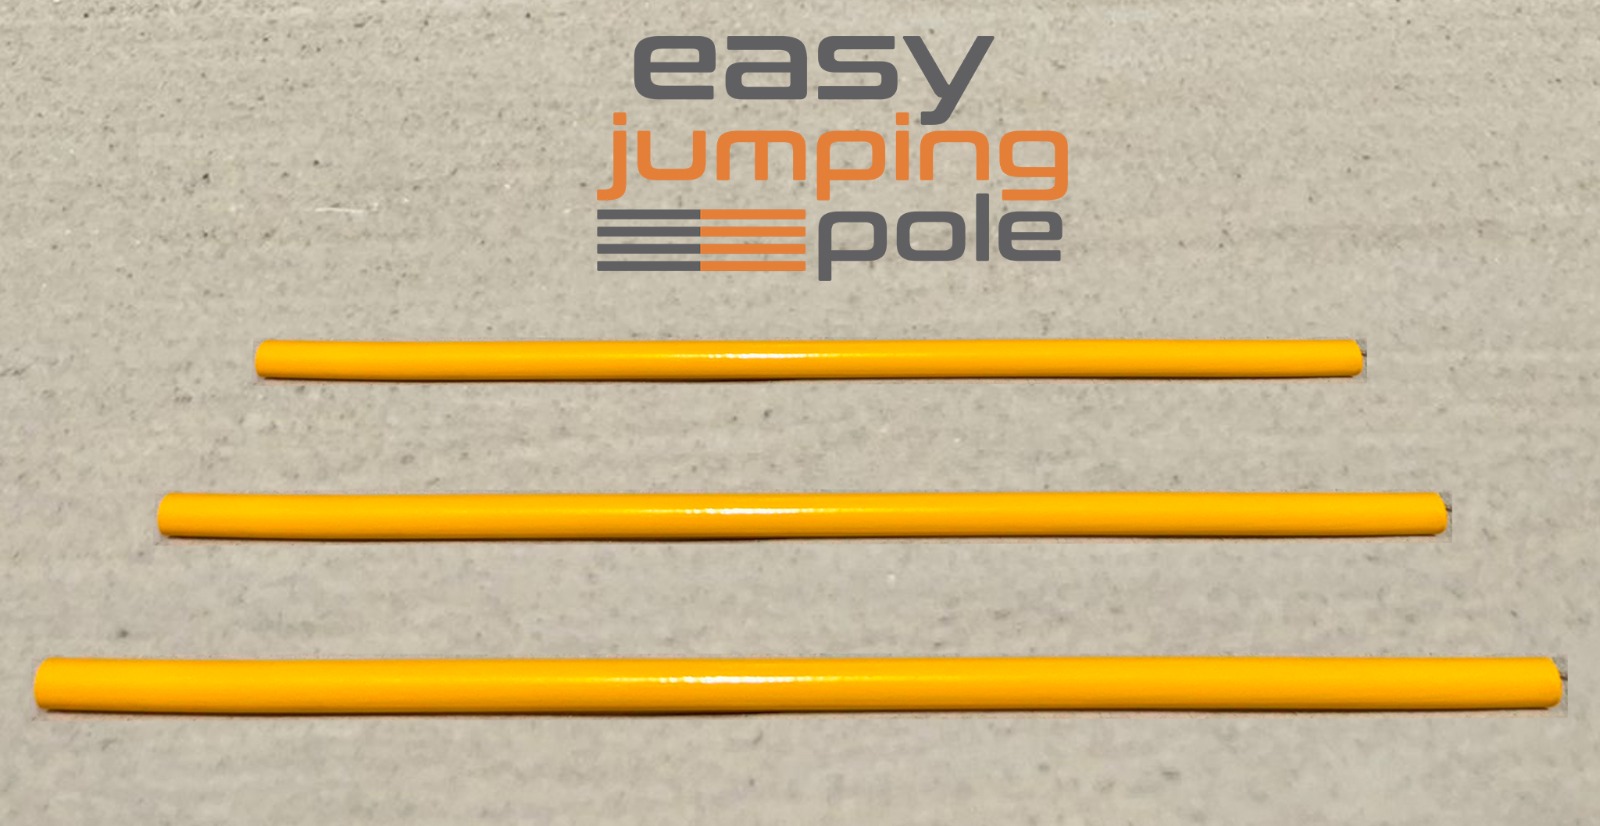 Easy jumping pole Model SC-7